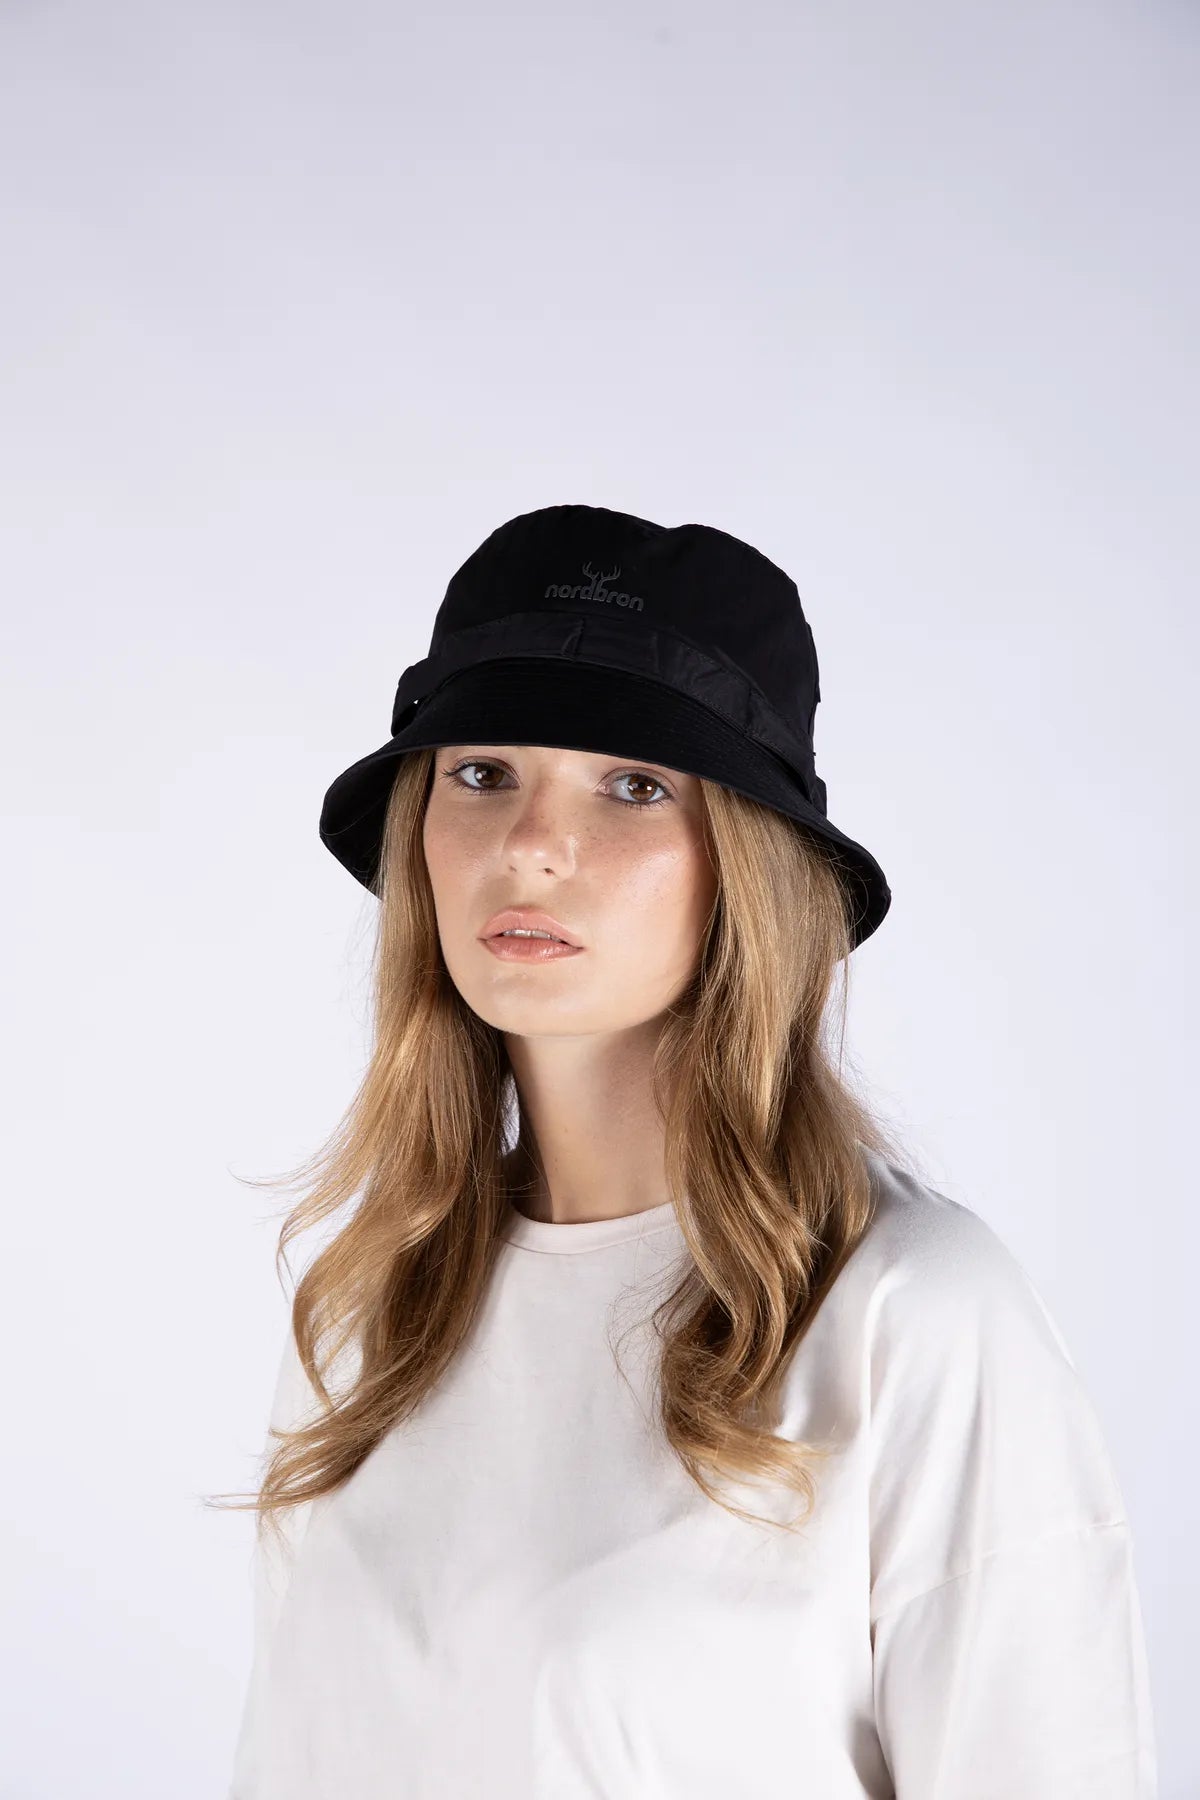 Unisex Black Color Bucket Hat